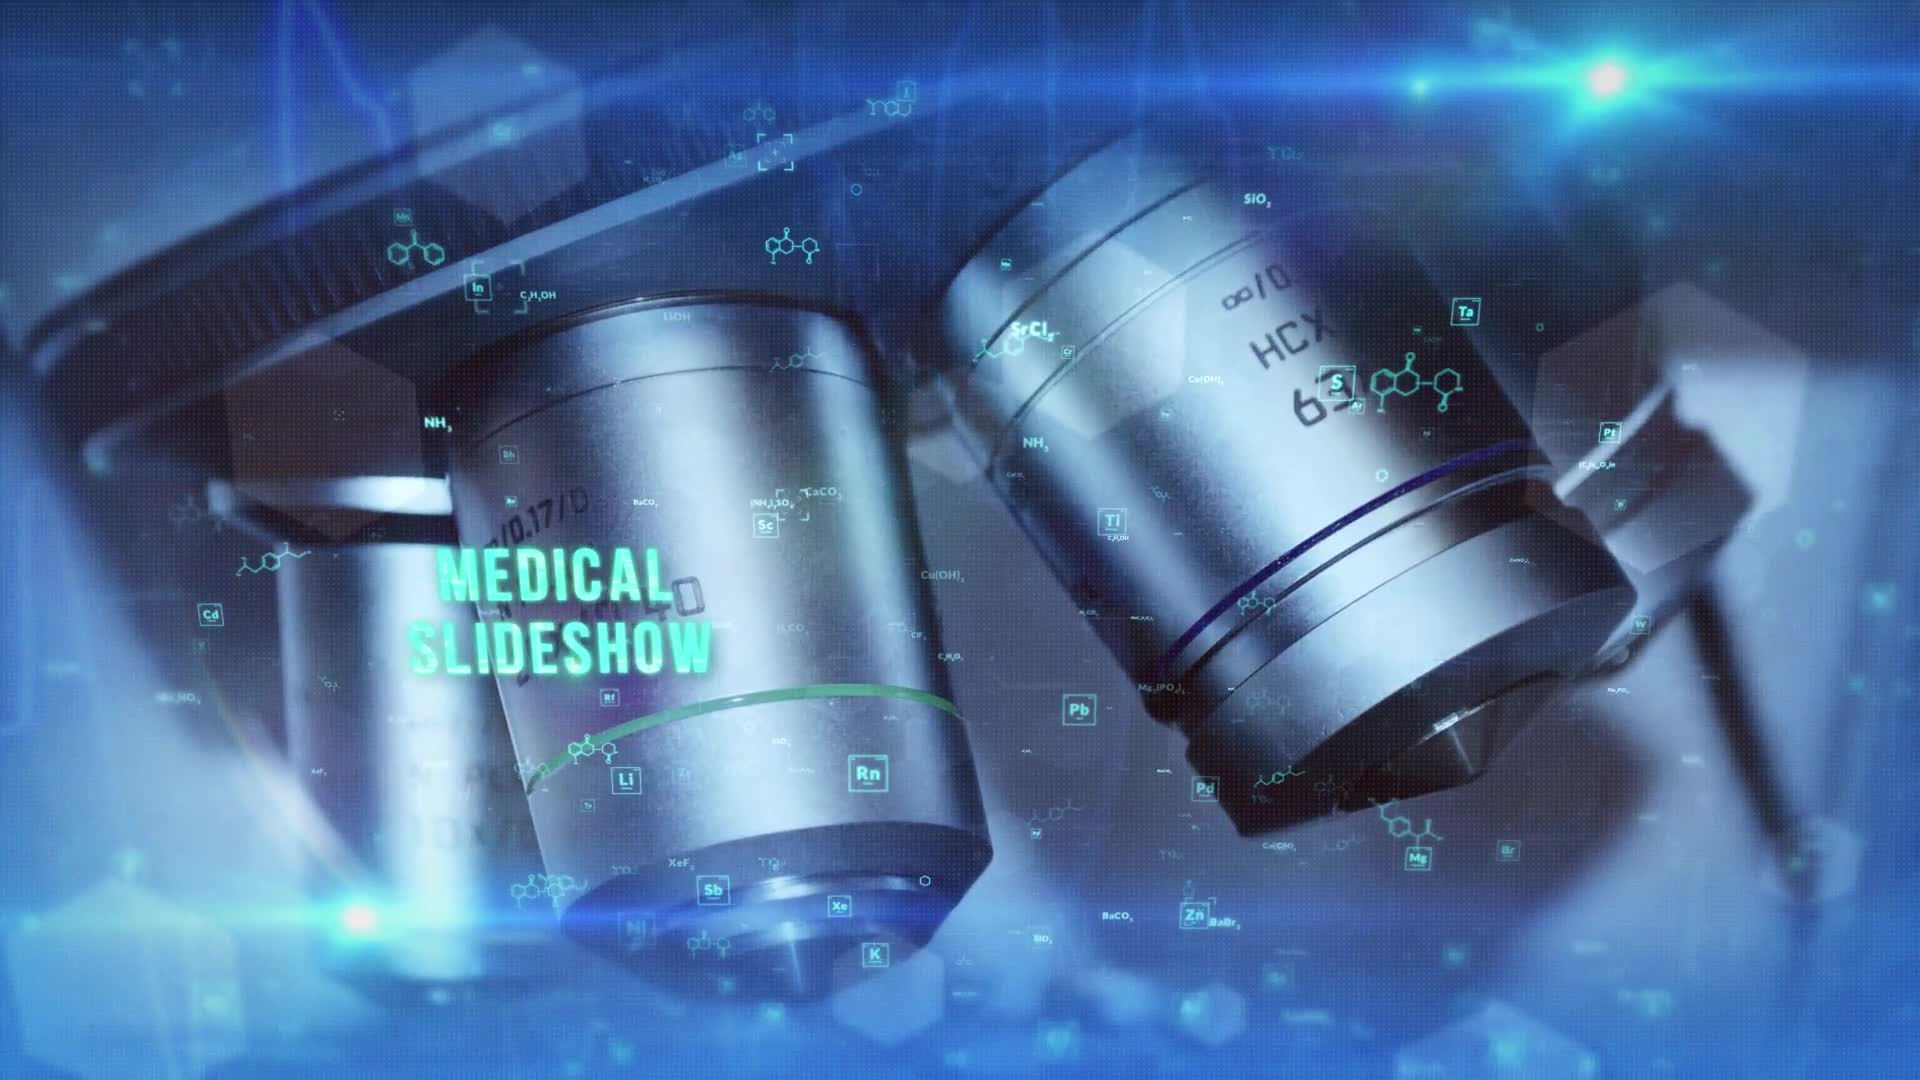 Medical High Tech Slideshow Premiere Pro Videohive 30357831 Premiere Pro Image 2